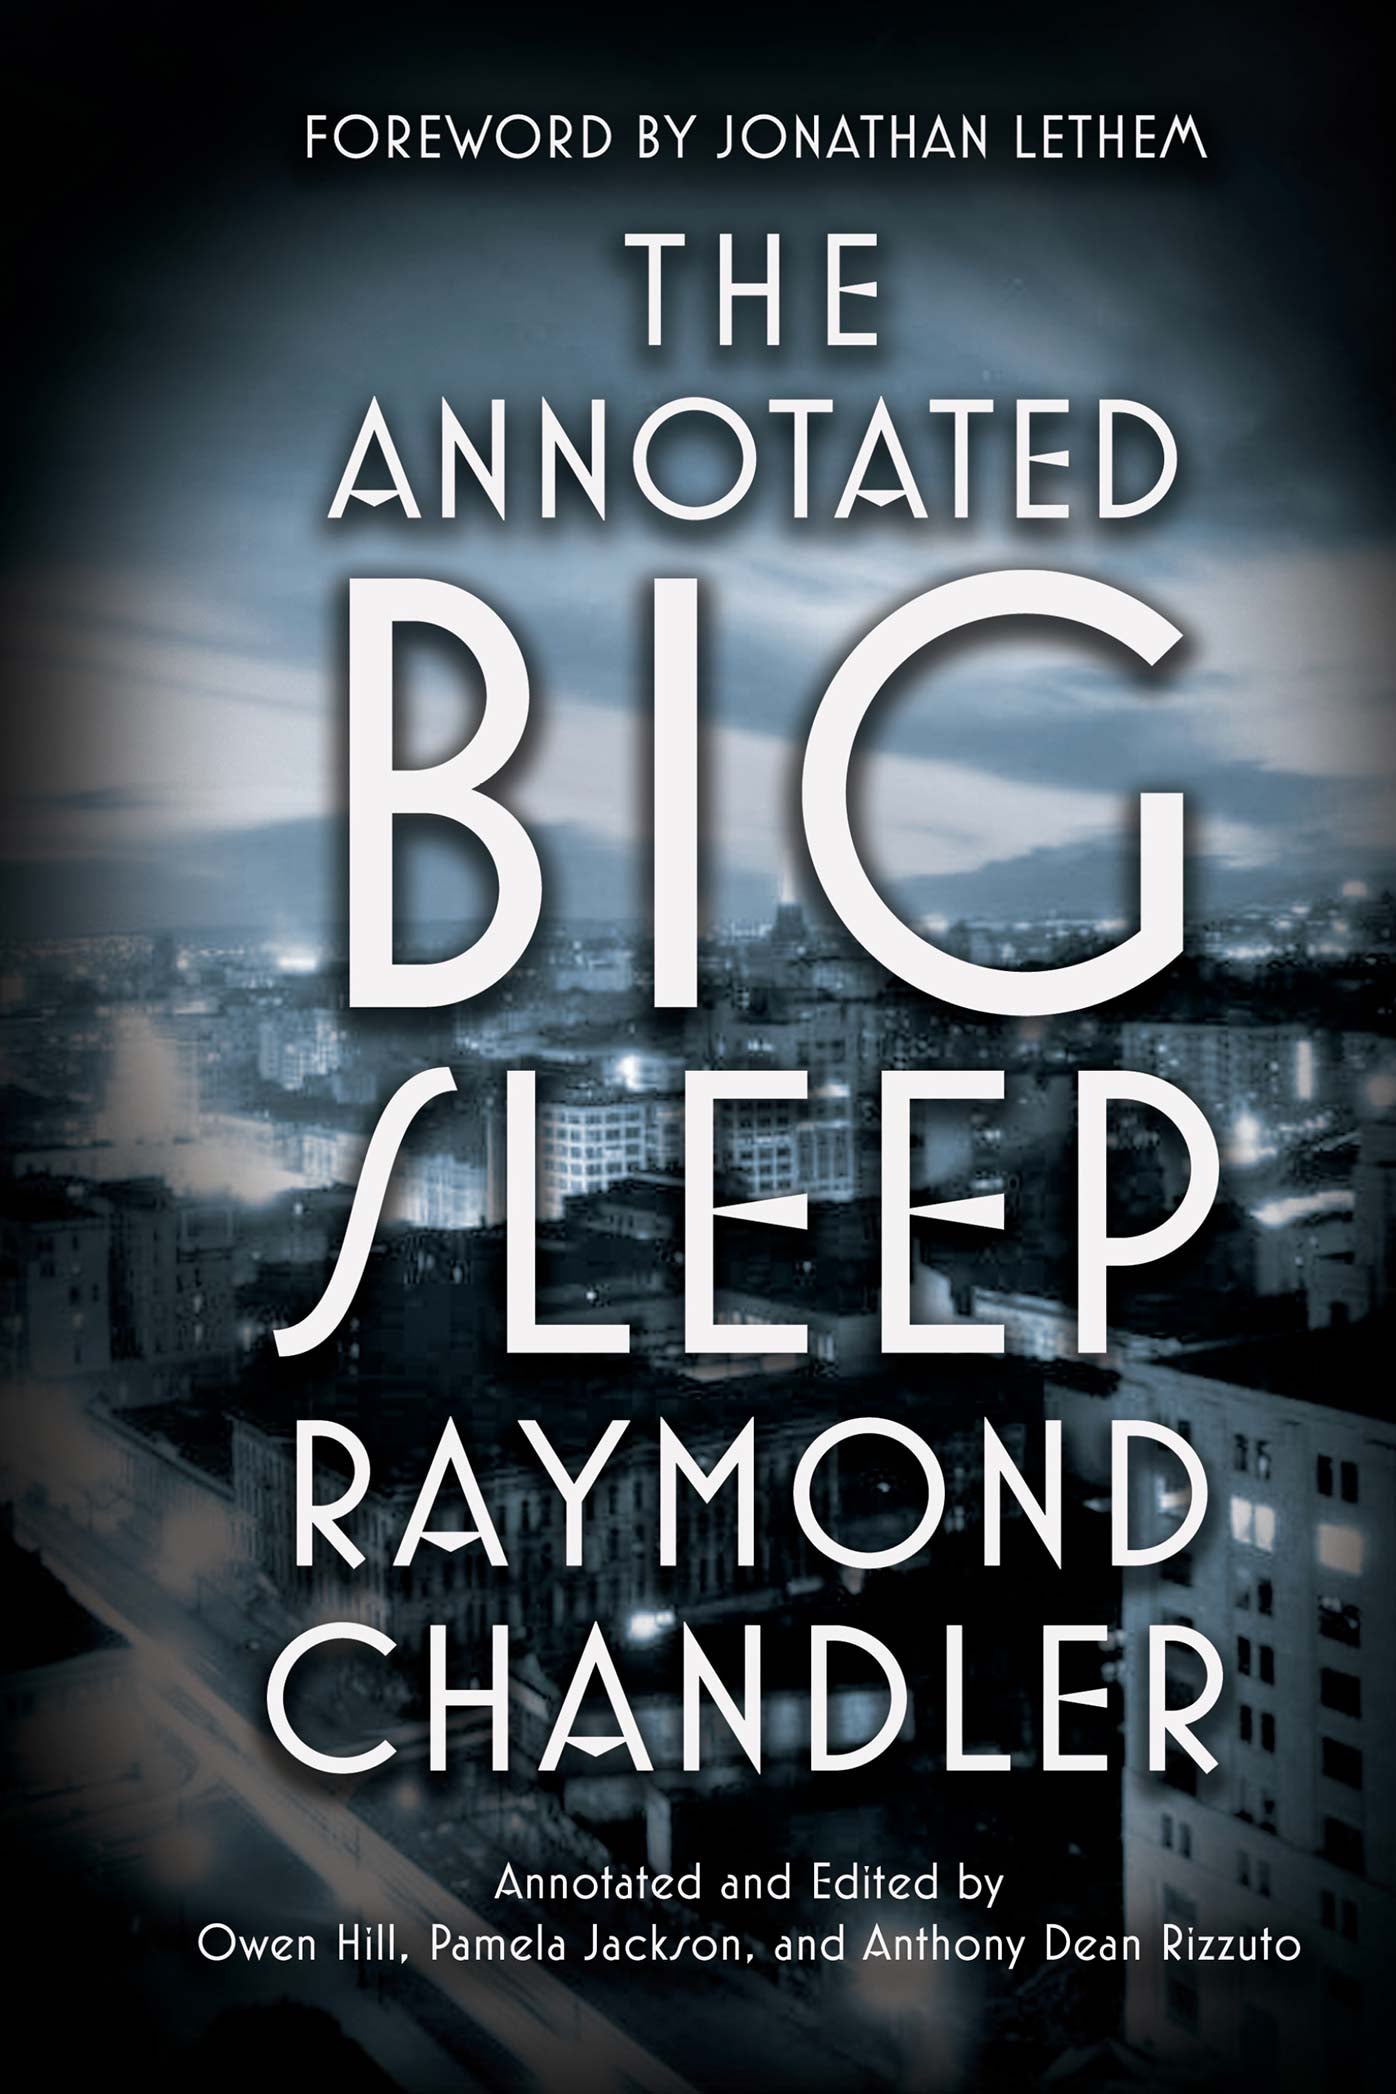 The Annotated Big Sleep